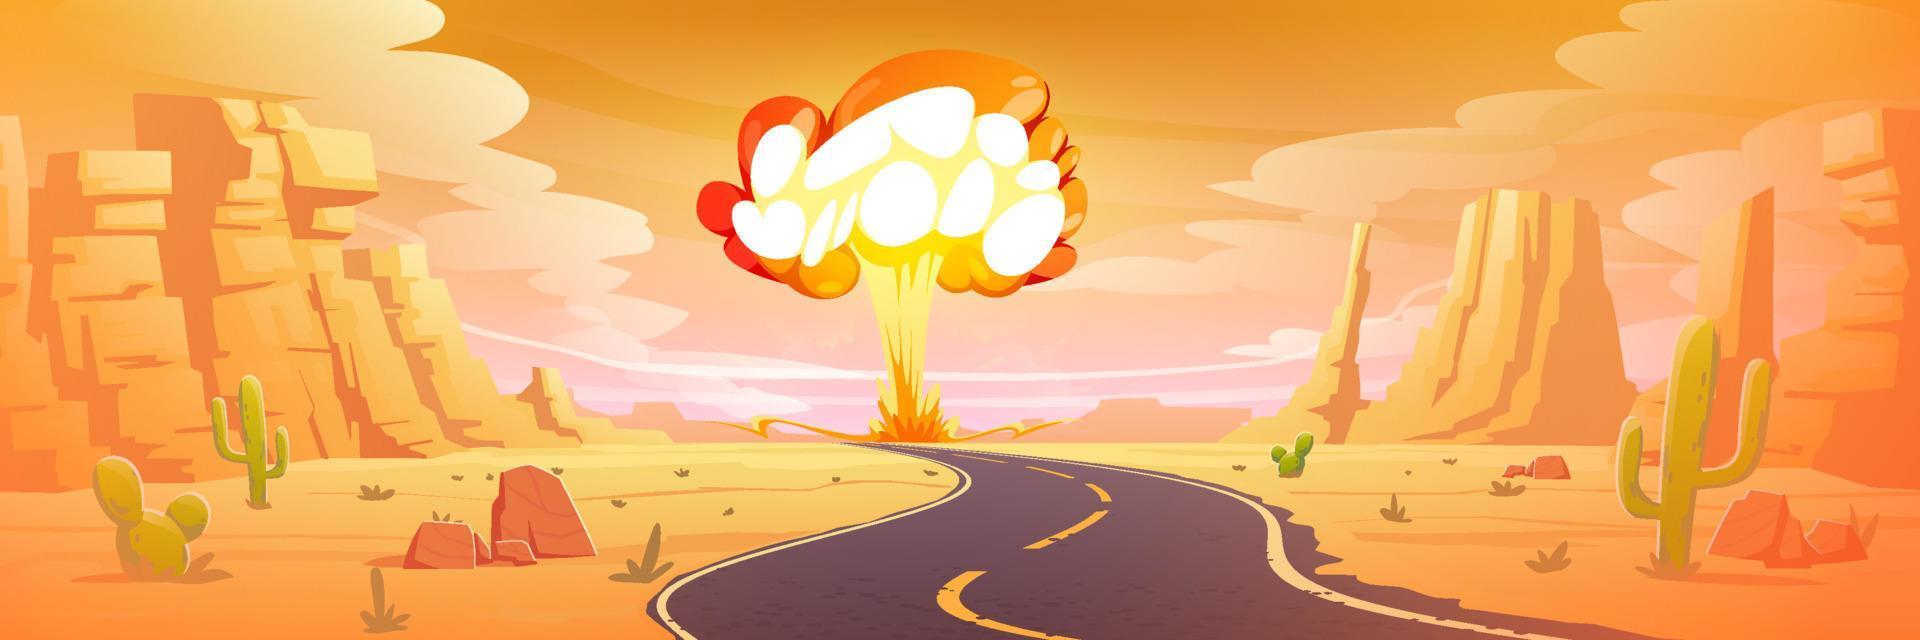 Atombombenexplosion in der Wüste, Atompilz vektor